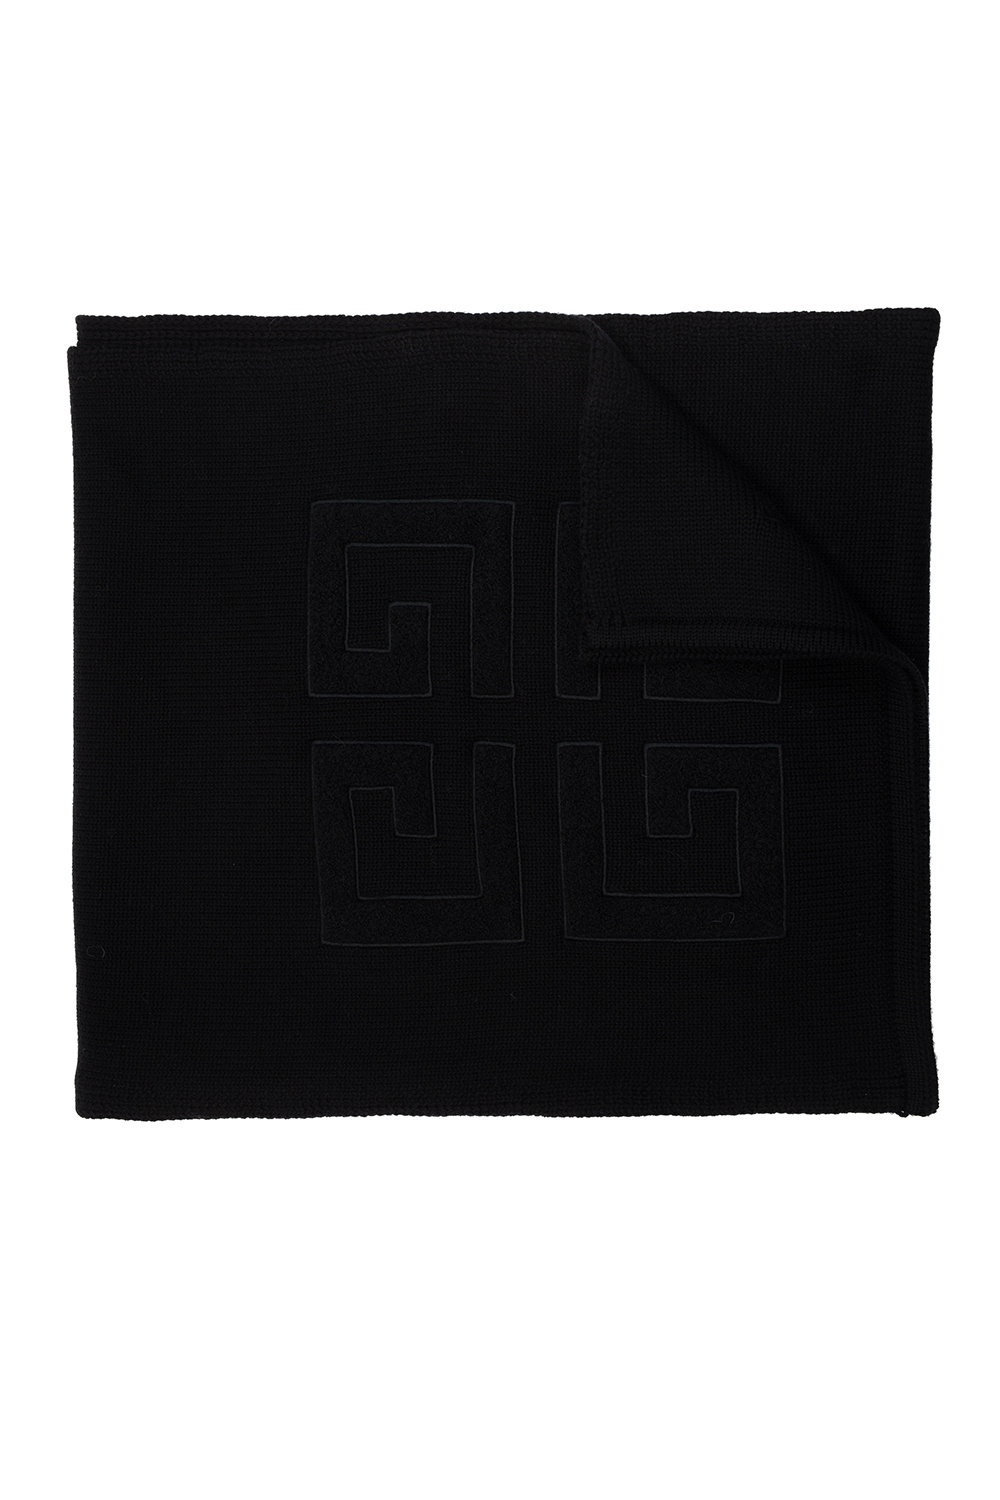 Givenchy print givenchy 4g logo crew knit